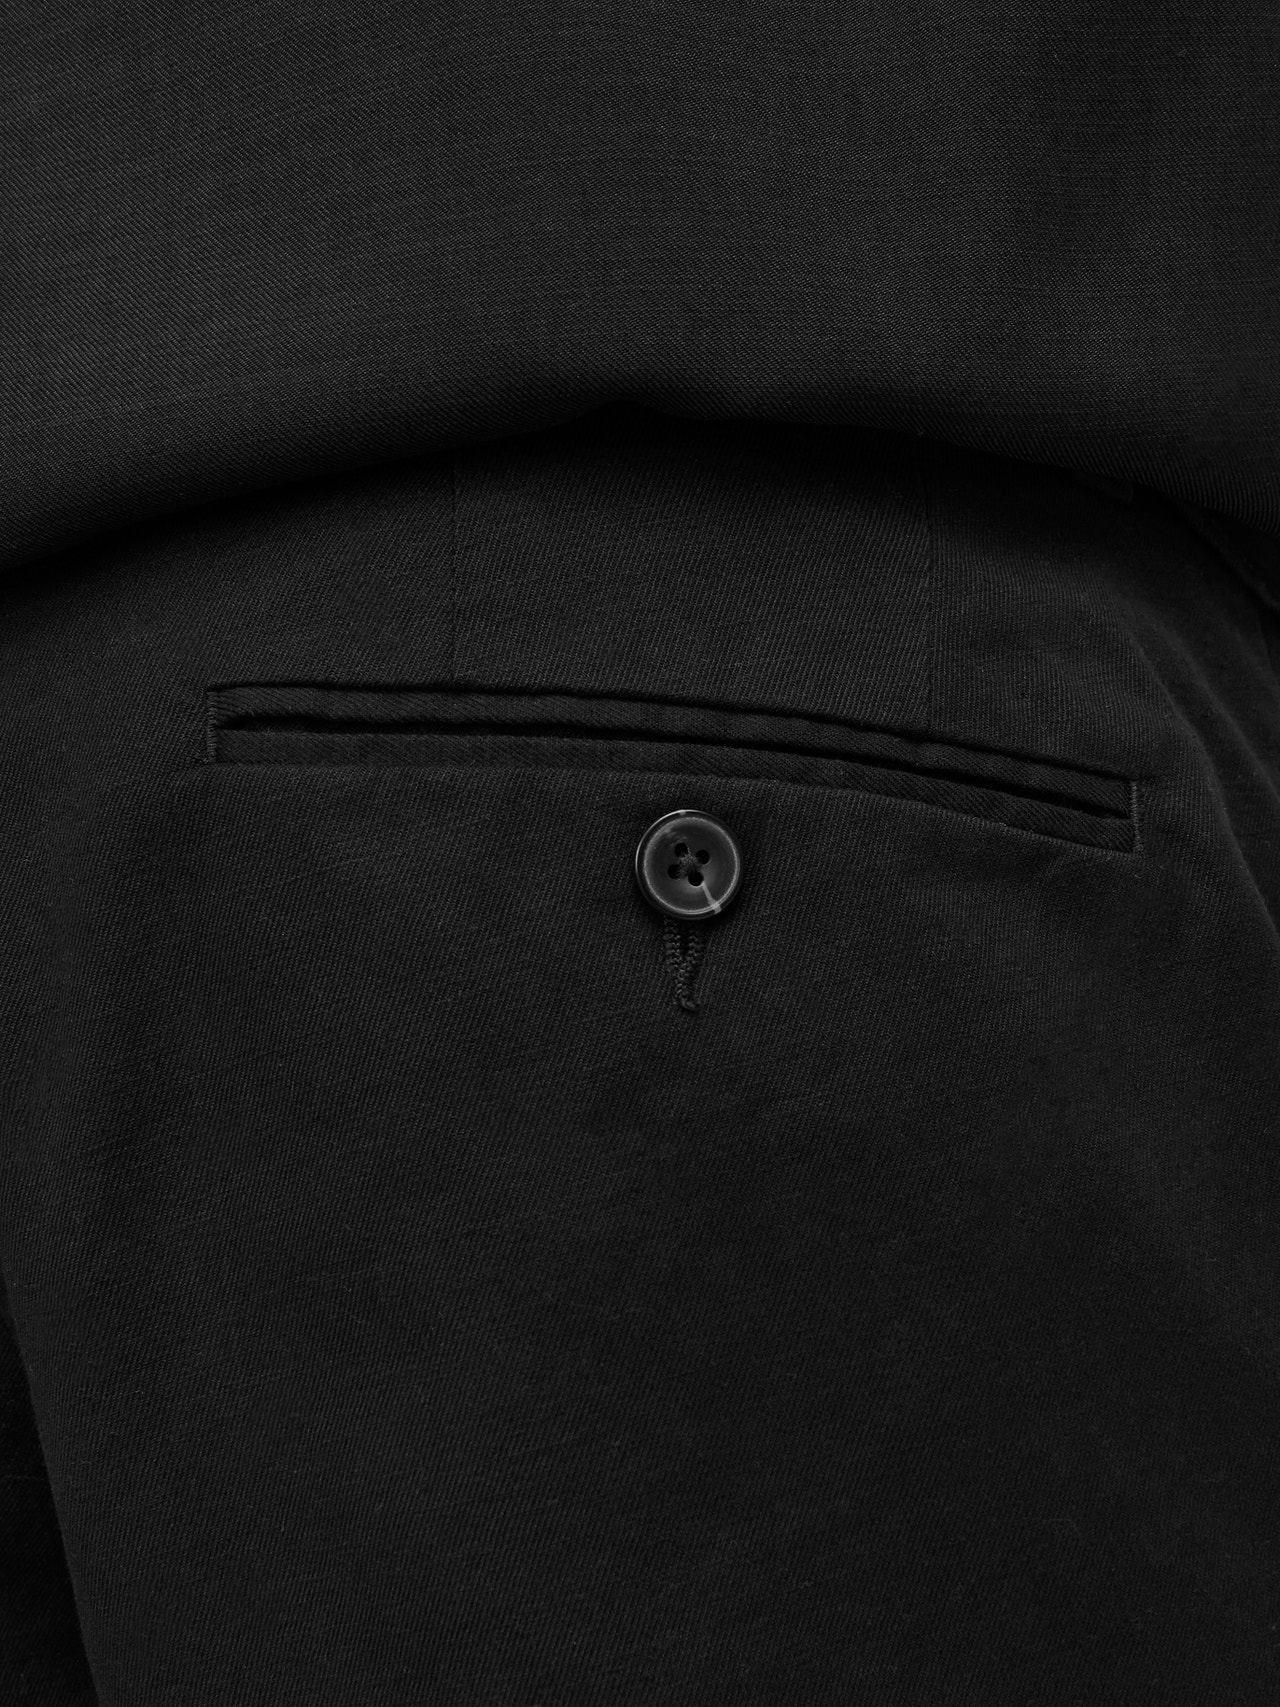 Jack & Jones Pantalon chino Relaxed Fit -Black - 12255441